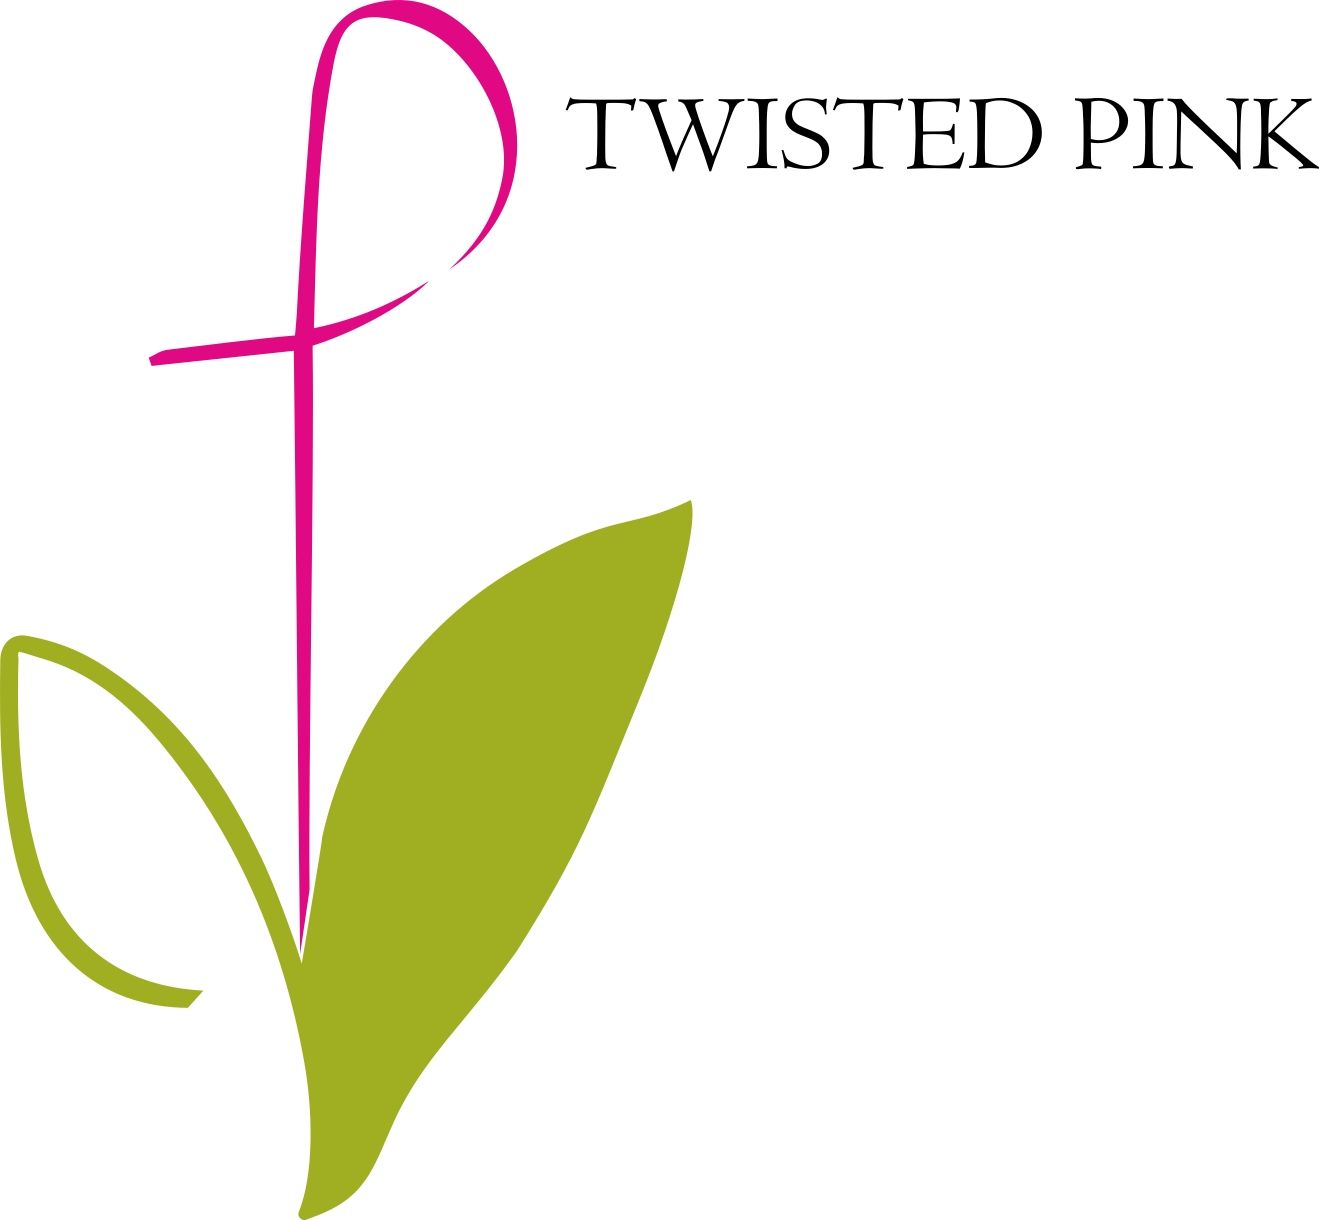 Twisted Pink logo